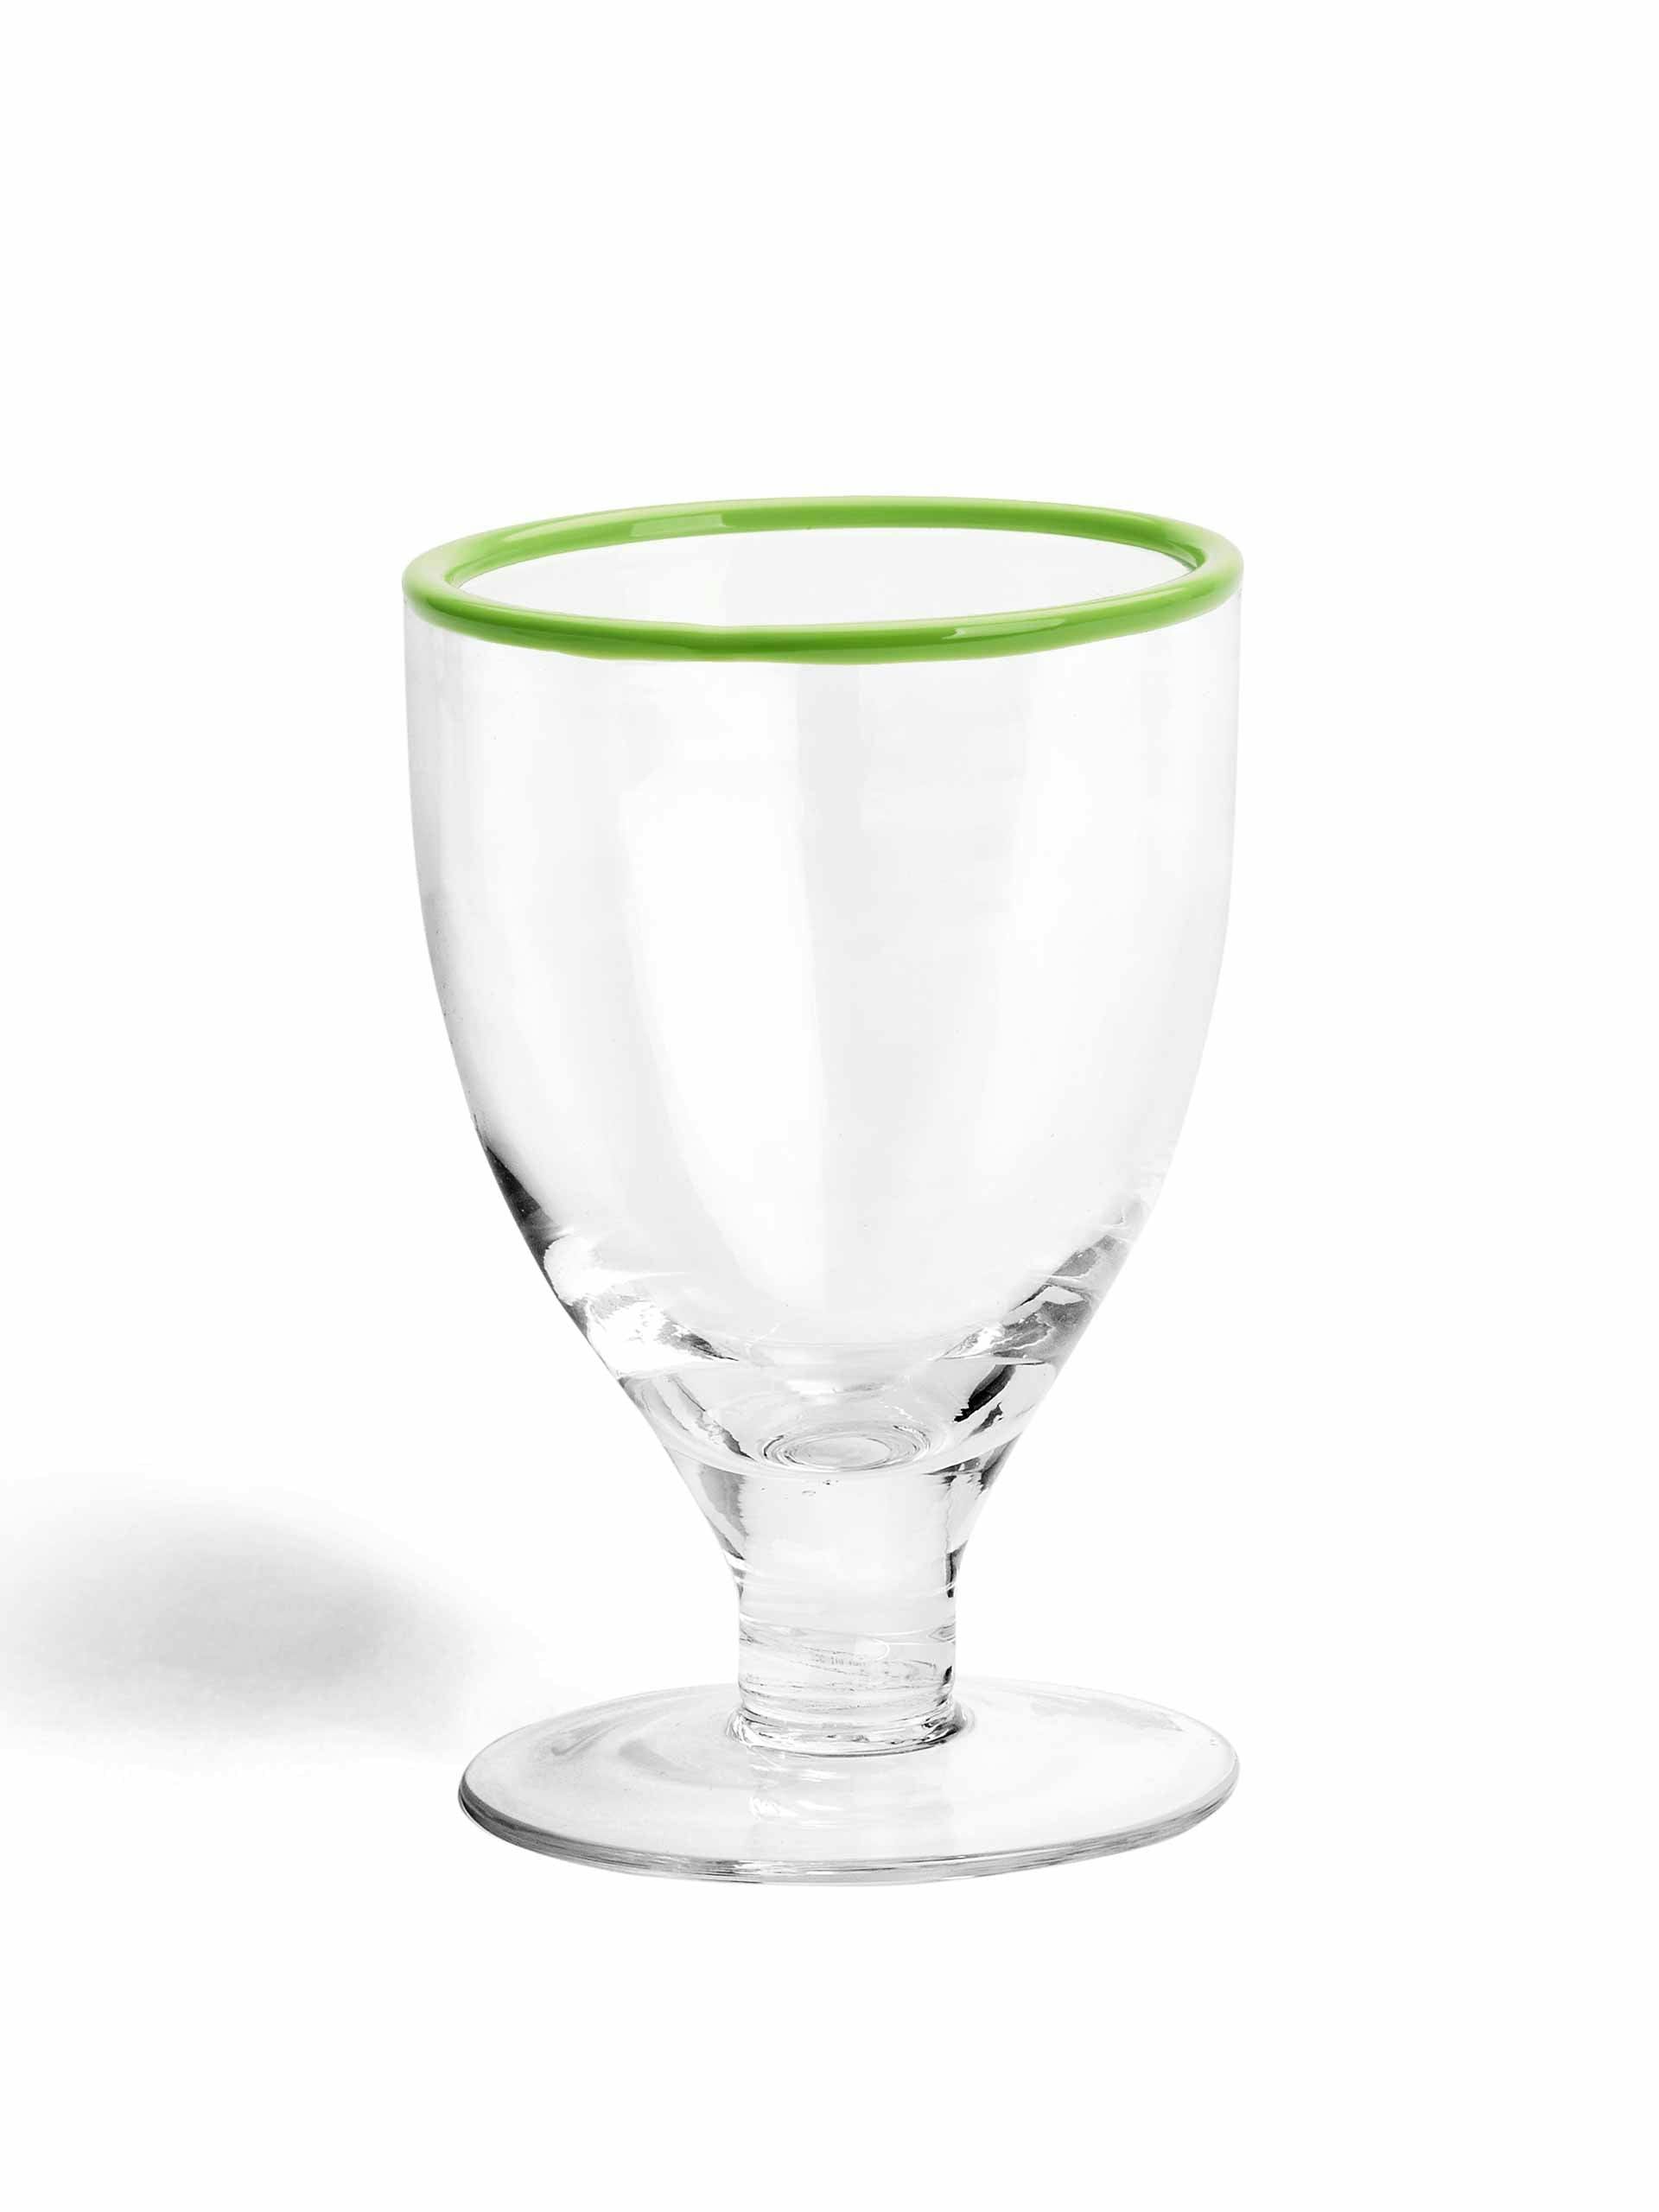 Idbury green rim wine glass